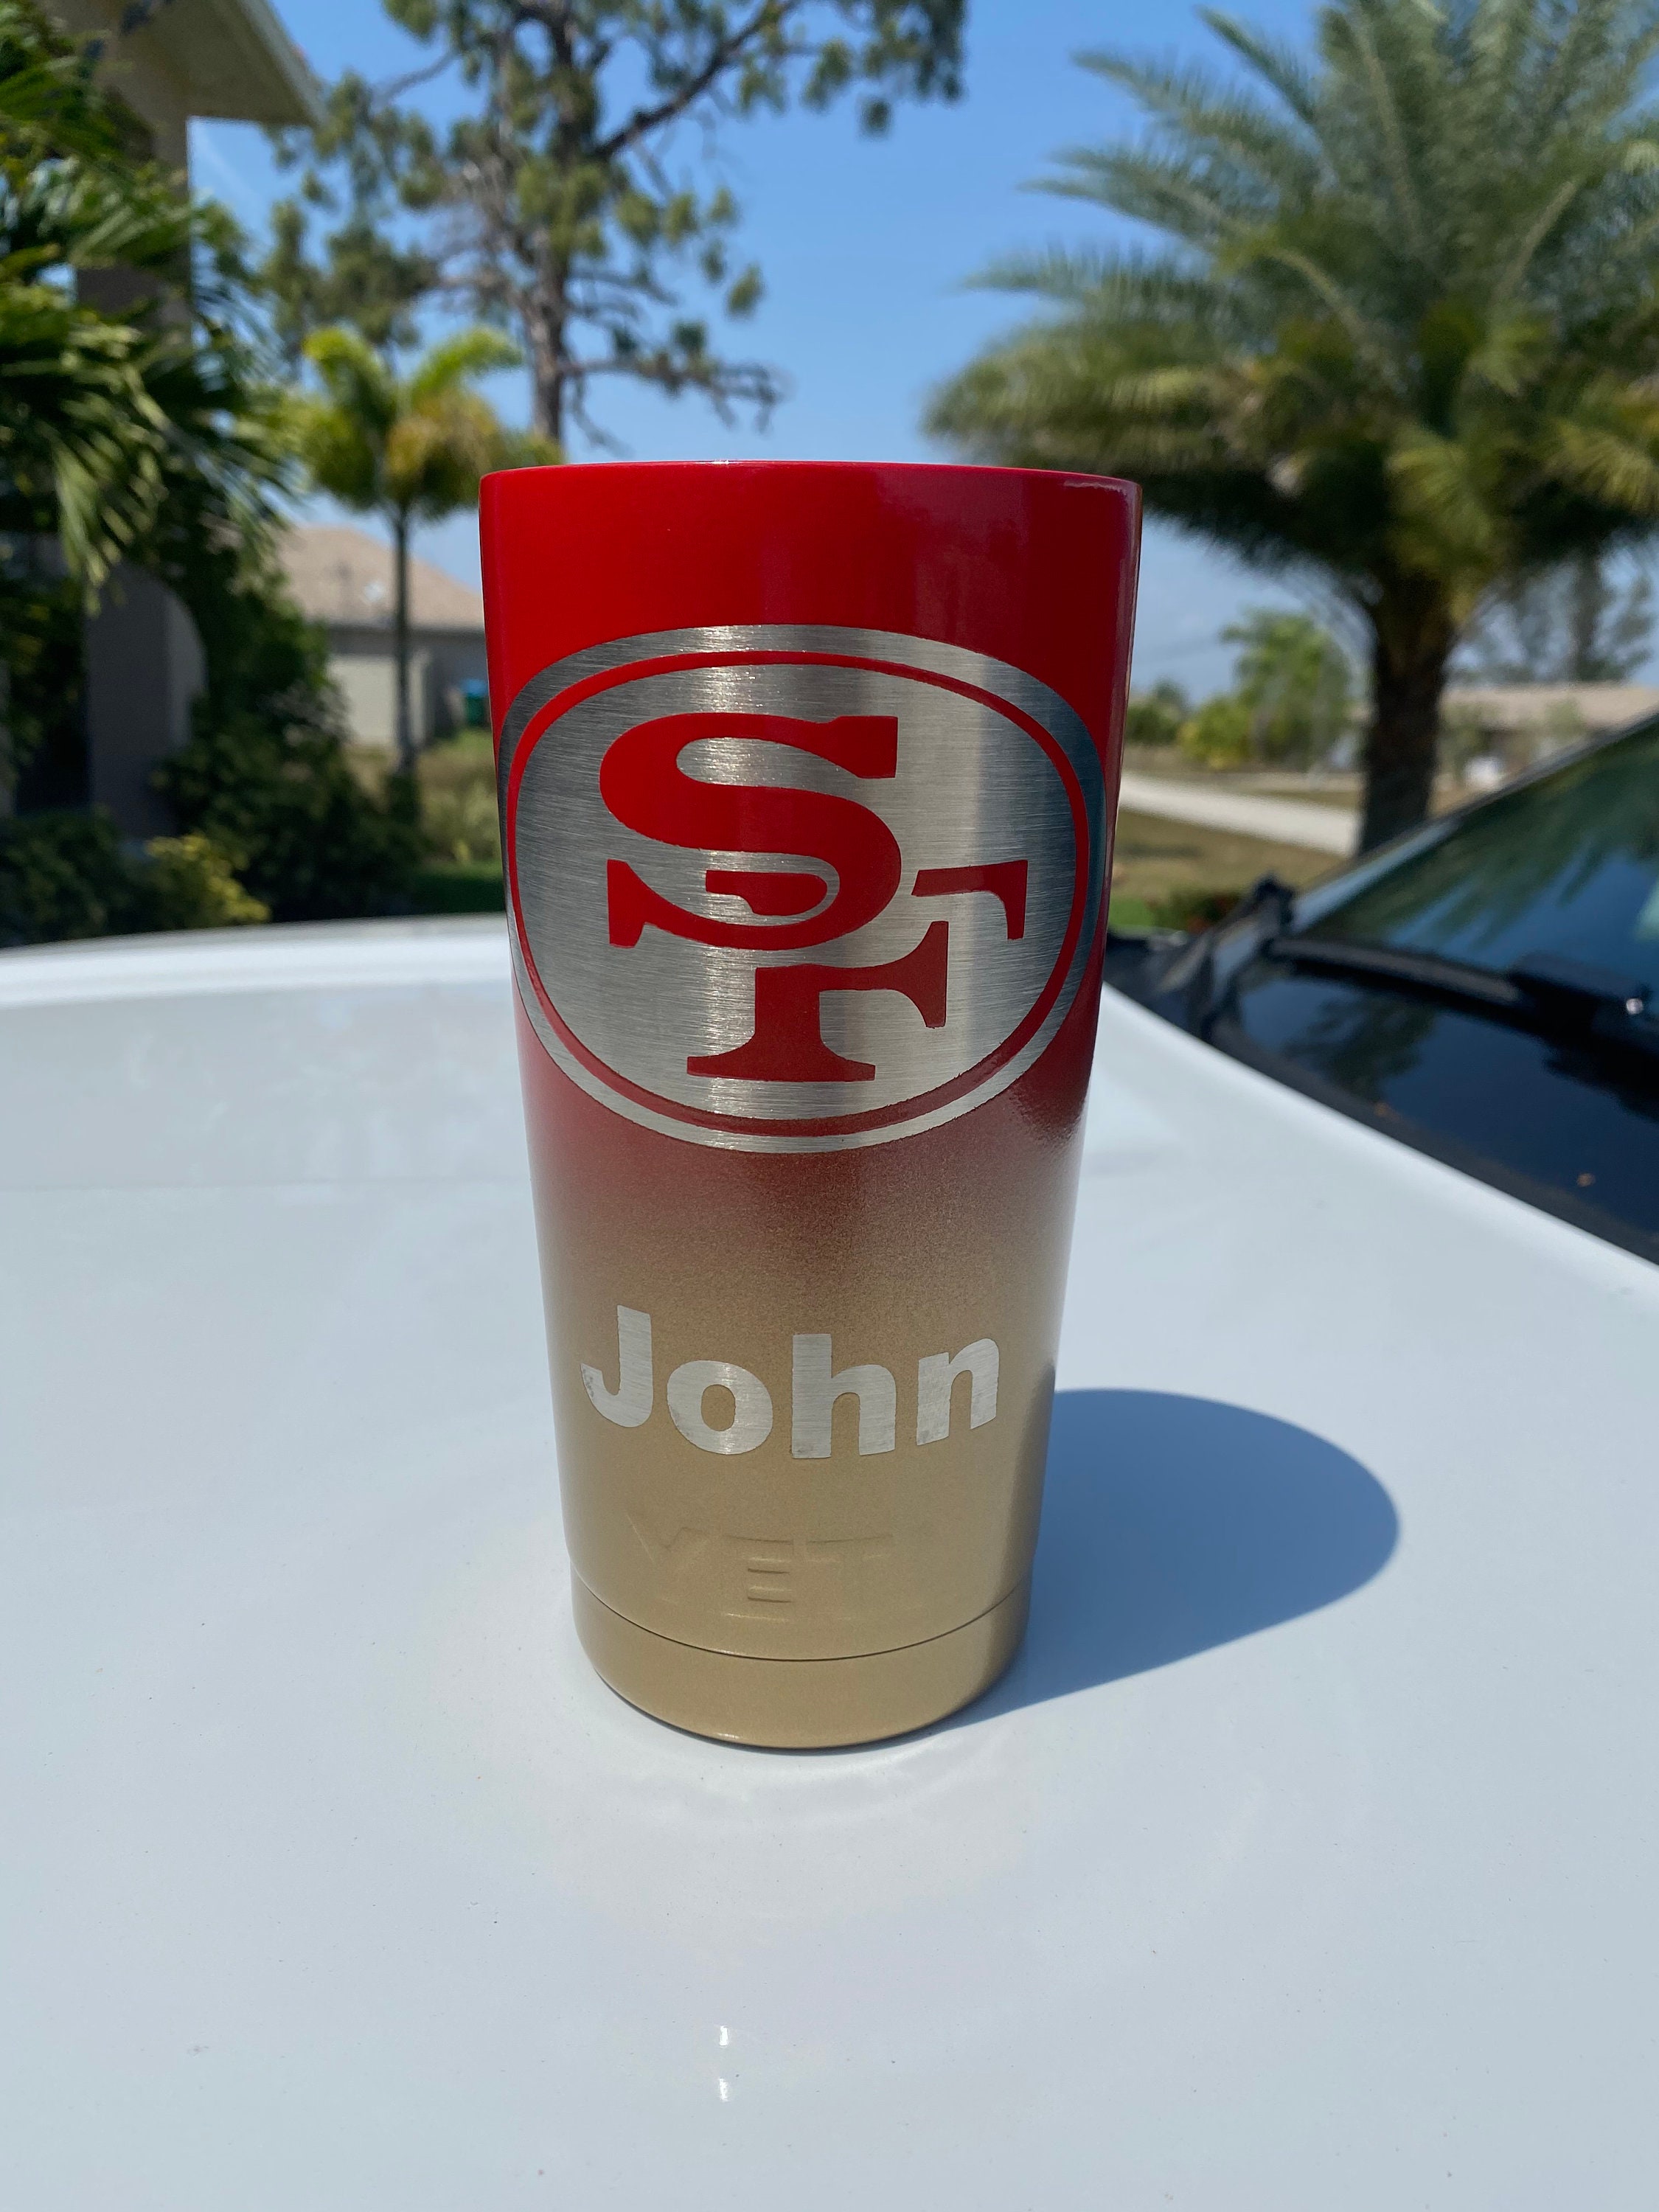 NFL San Francisco 49ers Full Wrap Travel Mug (500ml/16oz.)